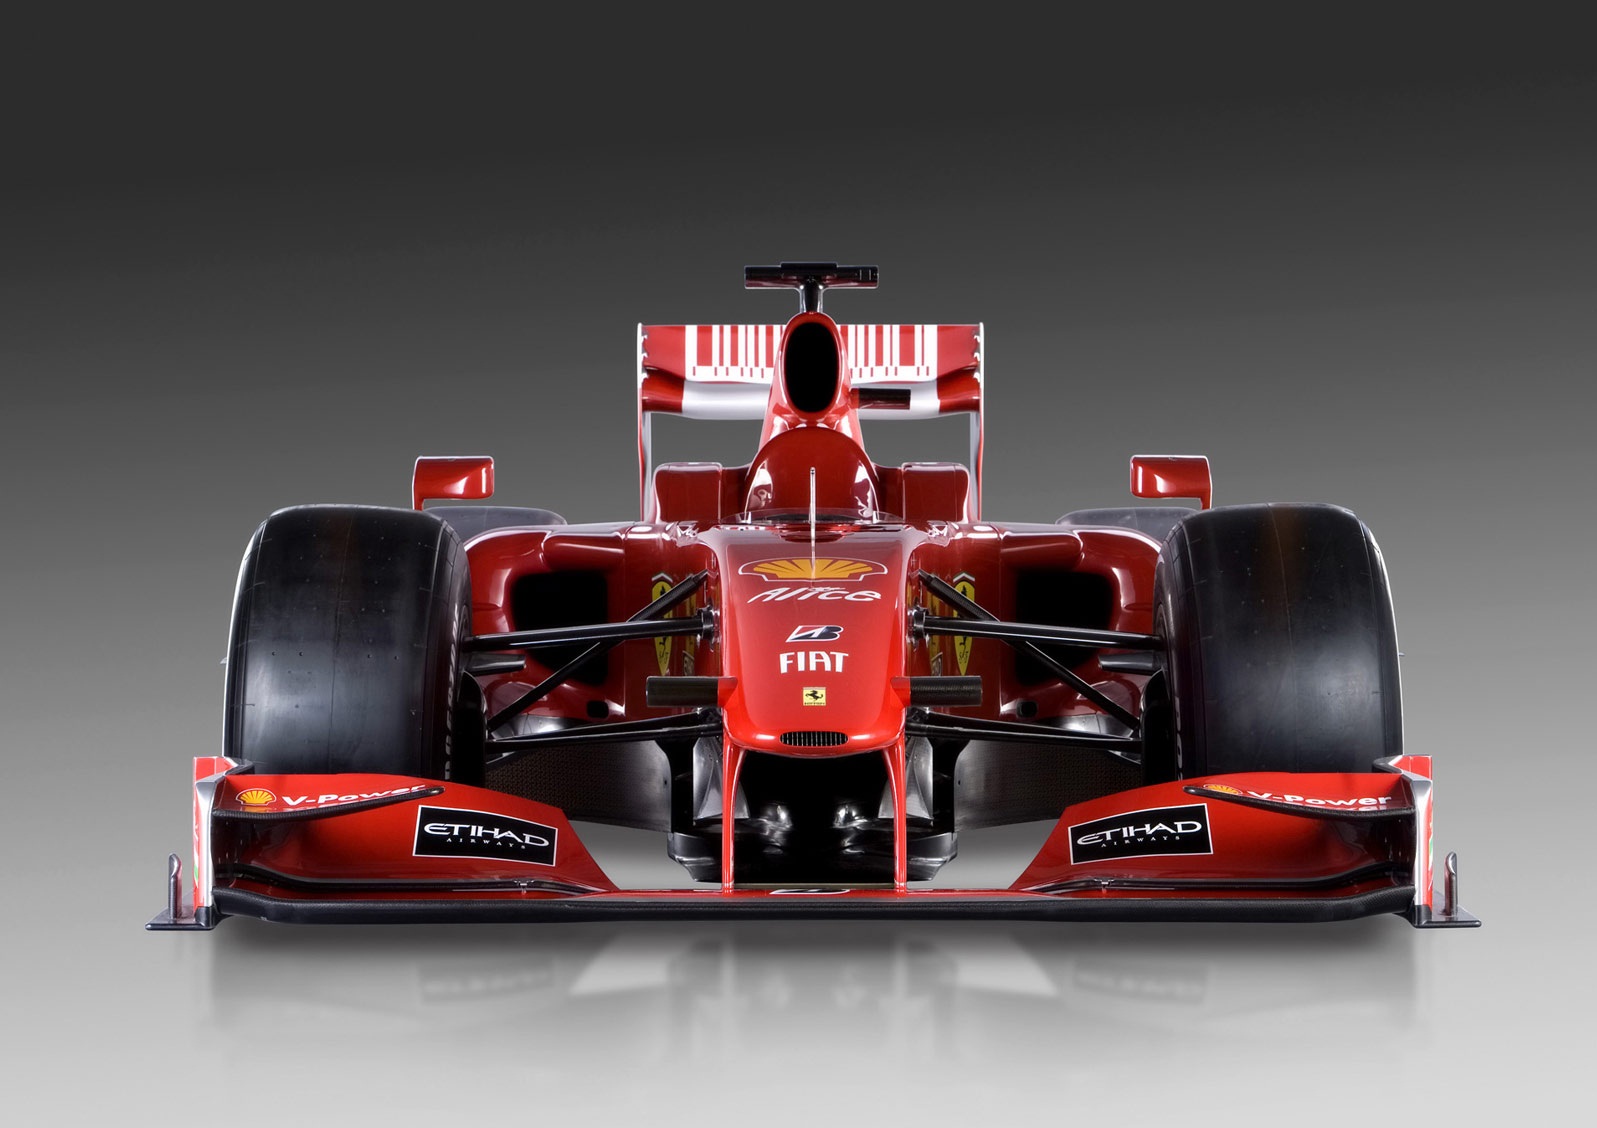 Ferrari F1 Wallpaper Image Group